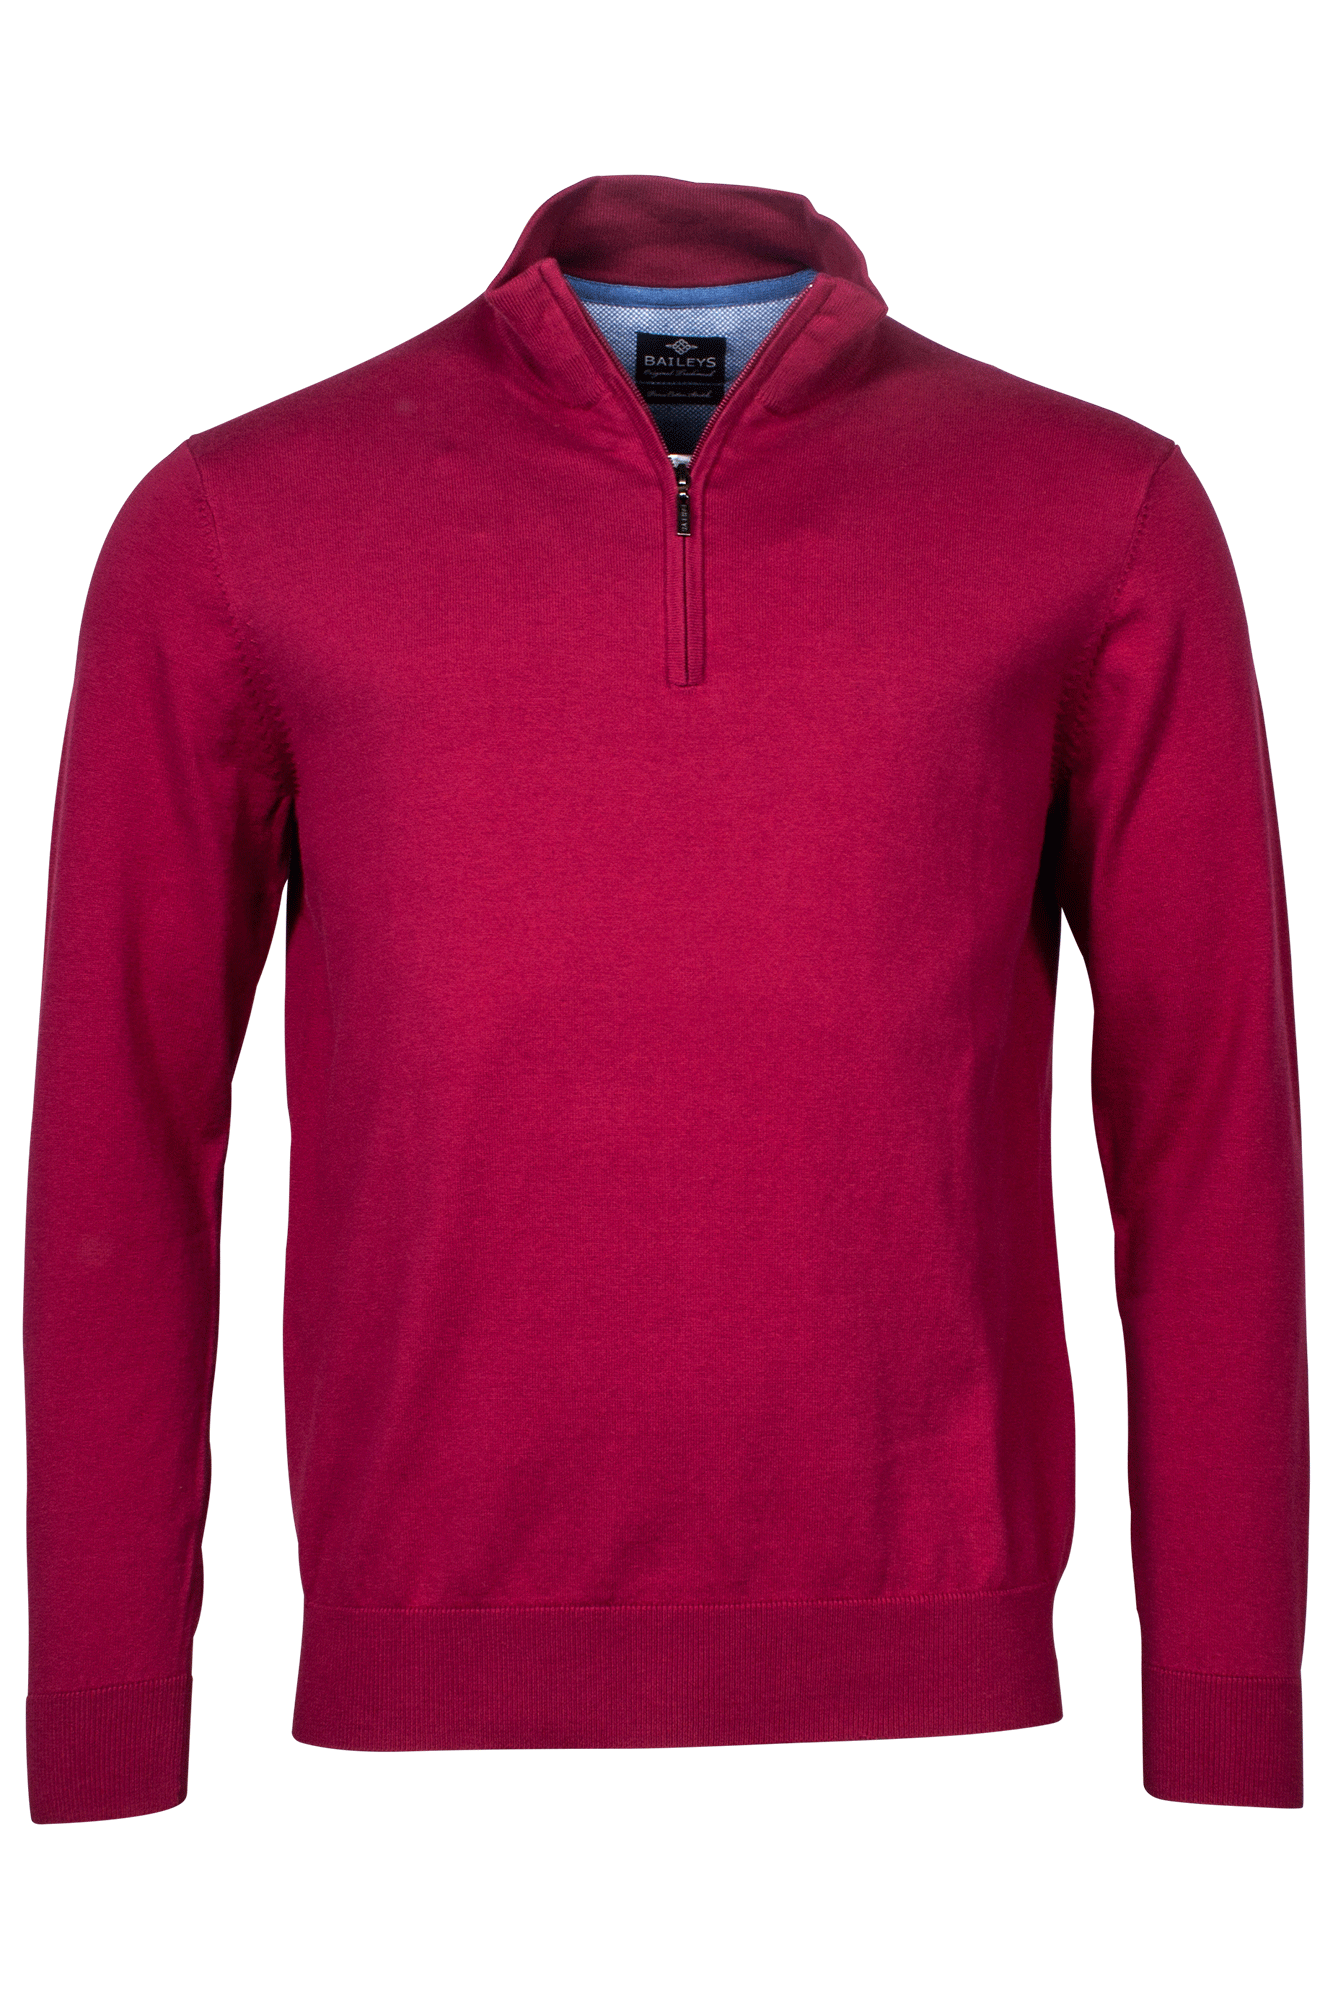 Men's Plum Red Cotton Half Zip Knit Jumper from Baileys & Giordano at StylishGuy Menswear Dublin